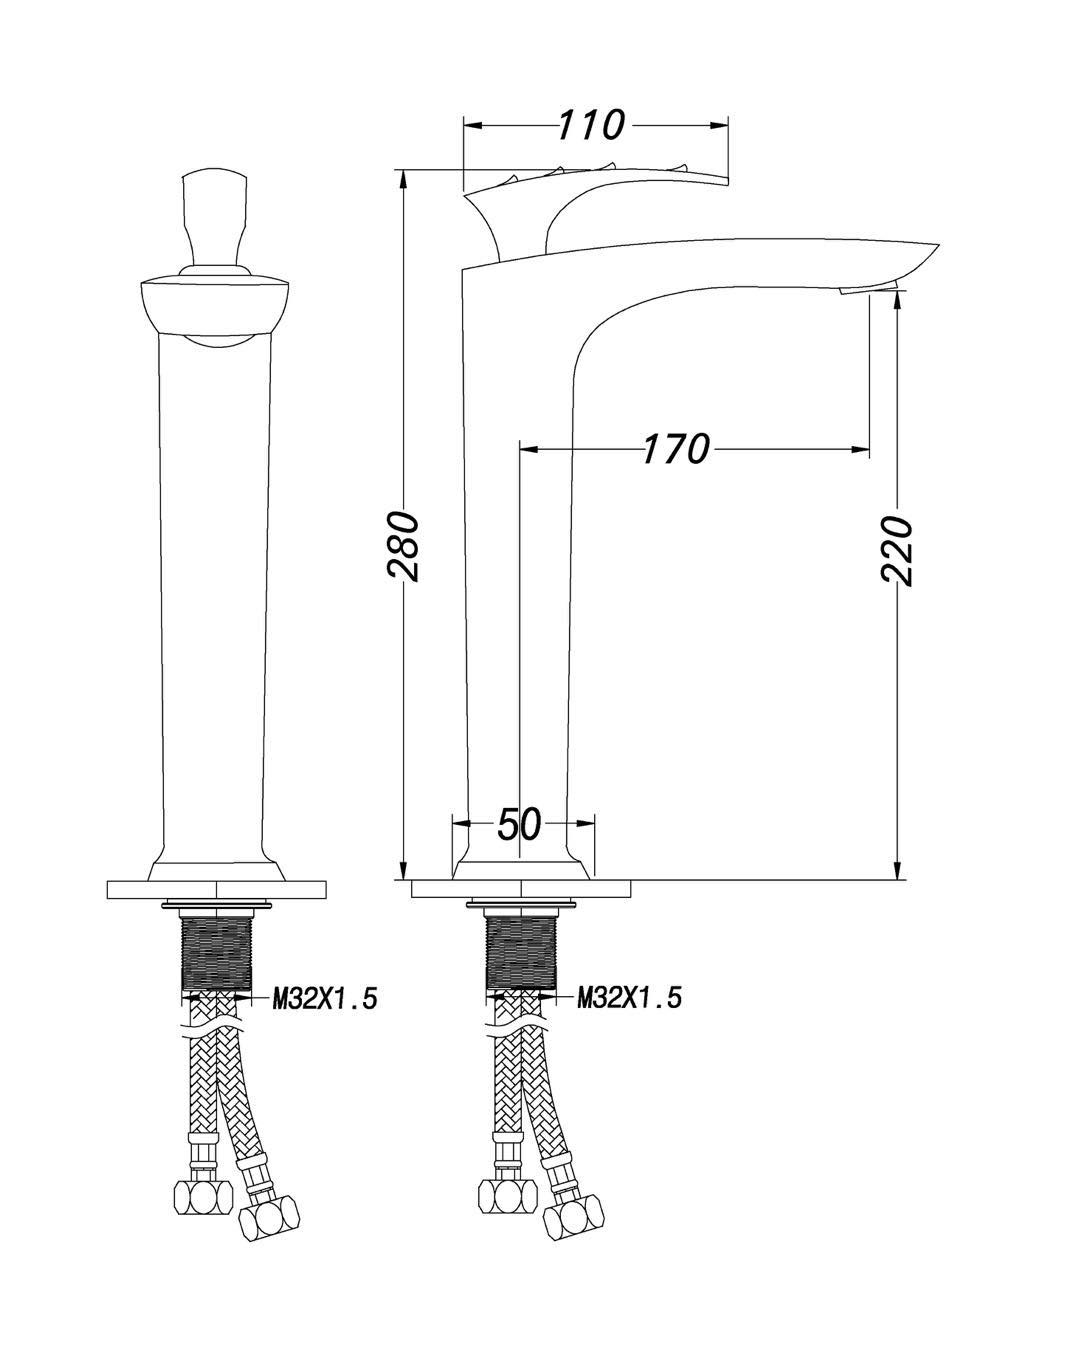 Patent Design Single Lever Bathroom Mixer Tap Dolphin Series Bathroom Taps